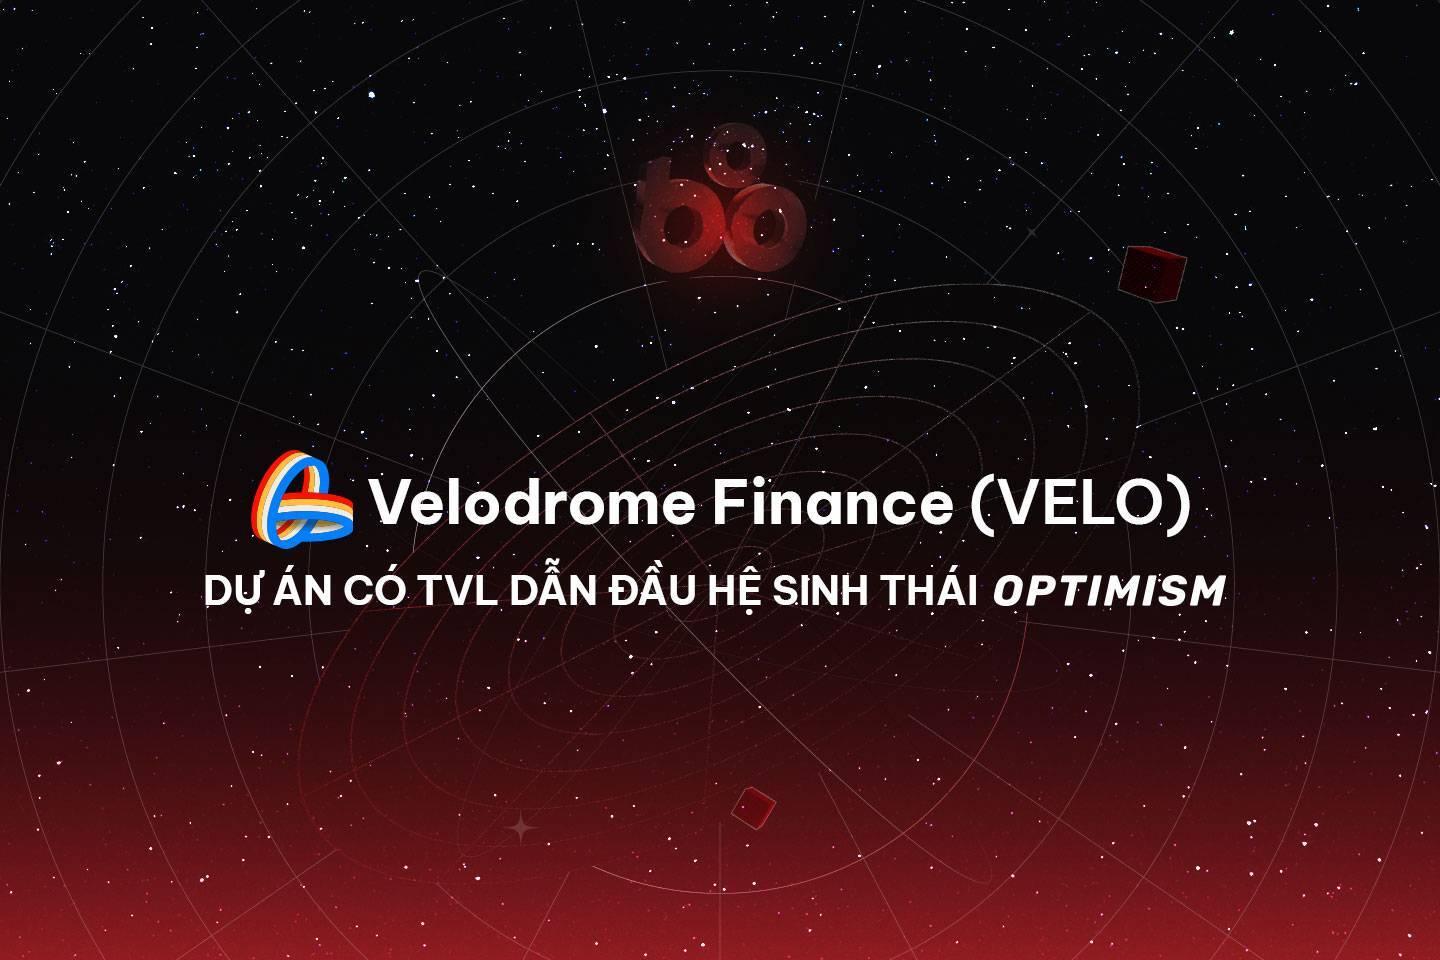 velodrome-finance-velo-tim-hieu-ve-du-an-co-tvl-dan-dau-he-sinh-thai-optimism